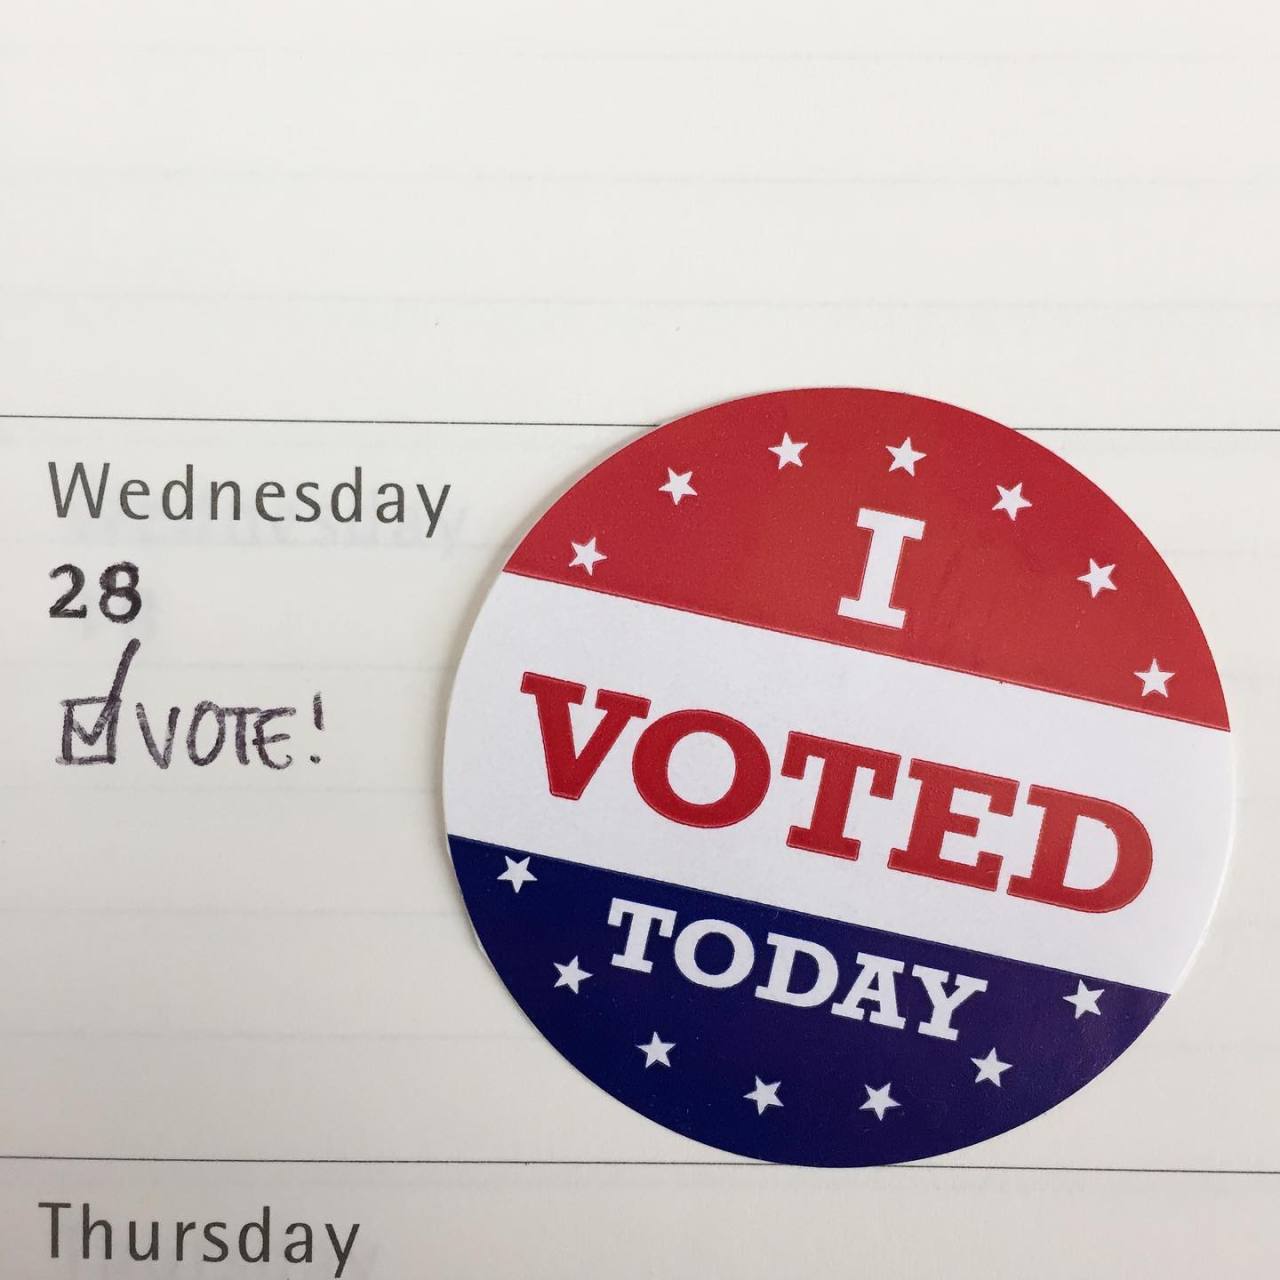 Have you voted yet? #vote https://instagr.am/p/CG5PdJxJu76/